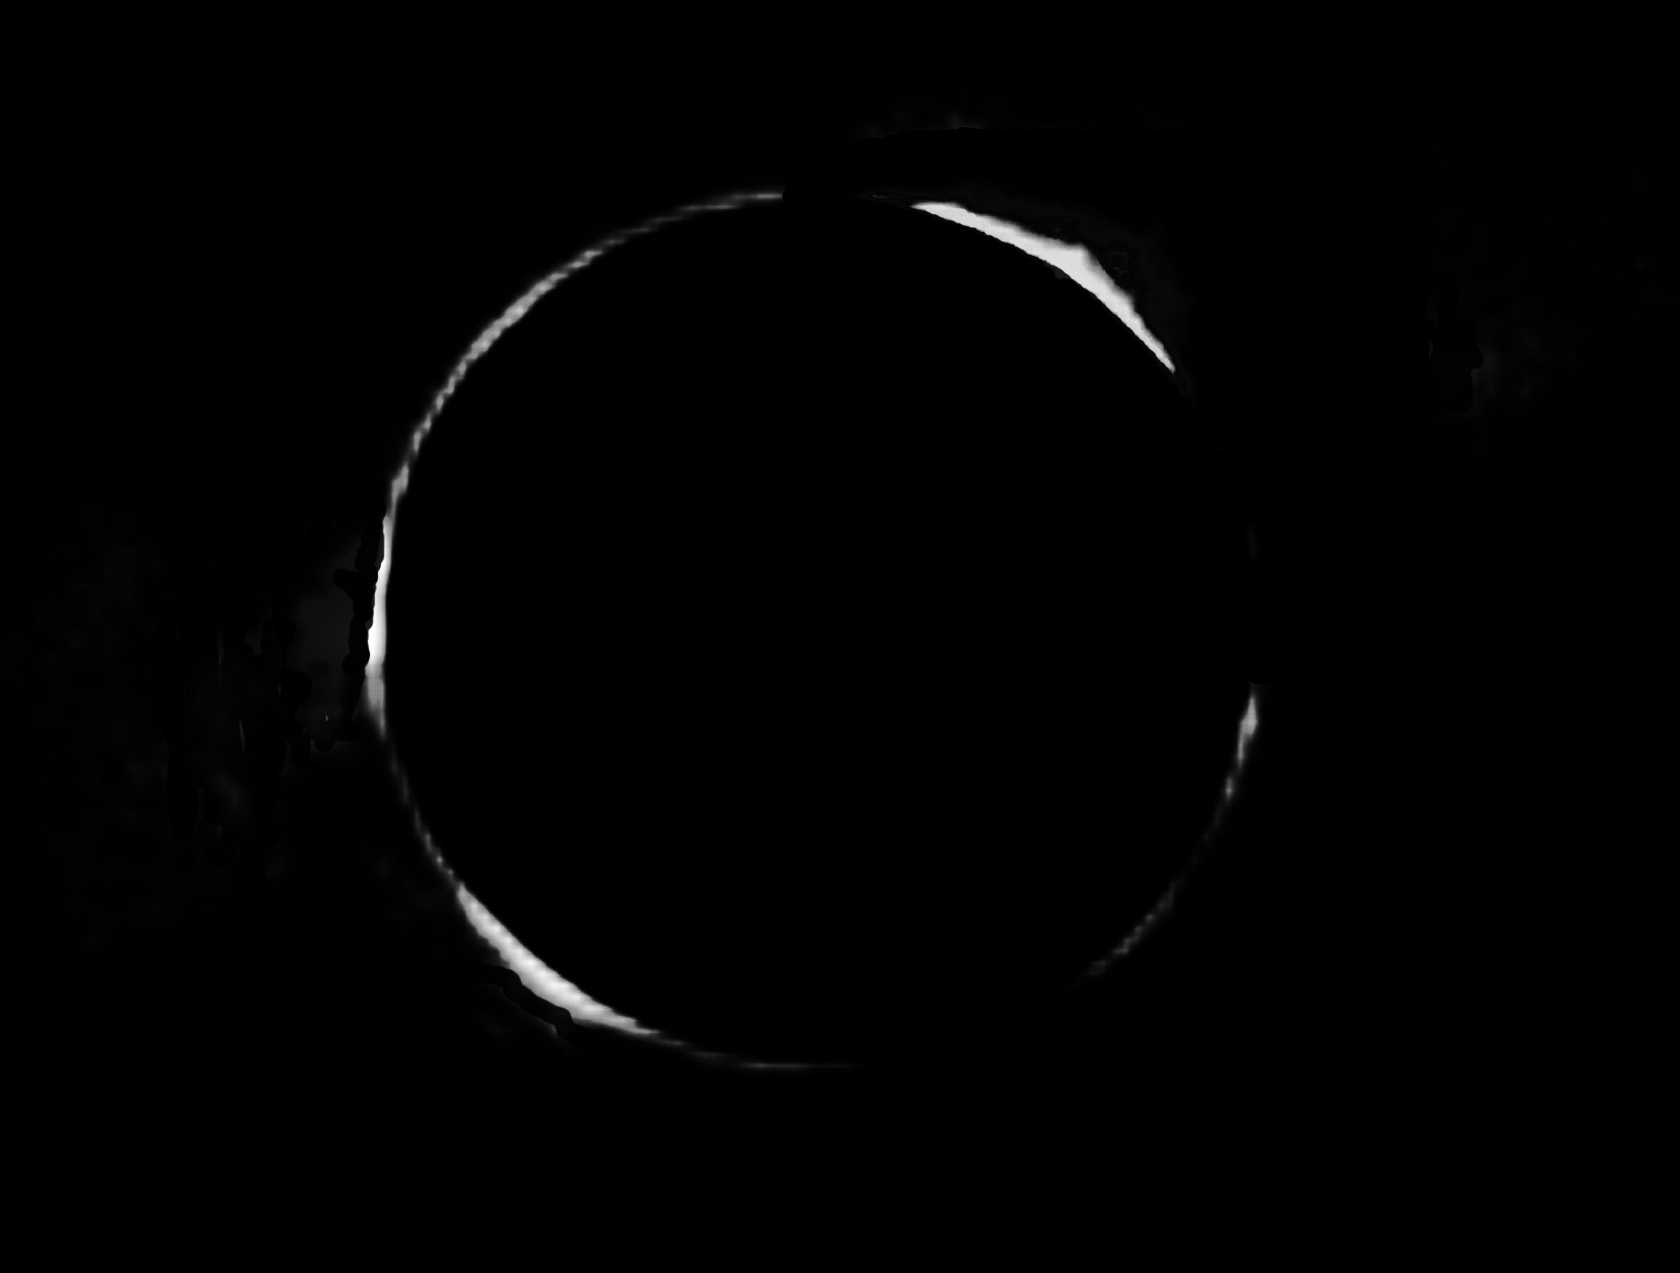 Eclipse 1963 - A14-Inner Corona